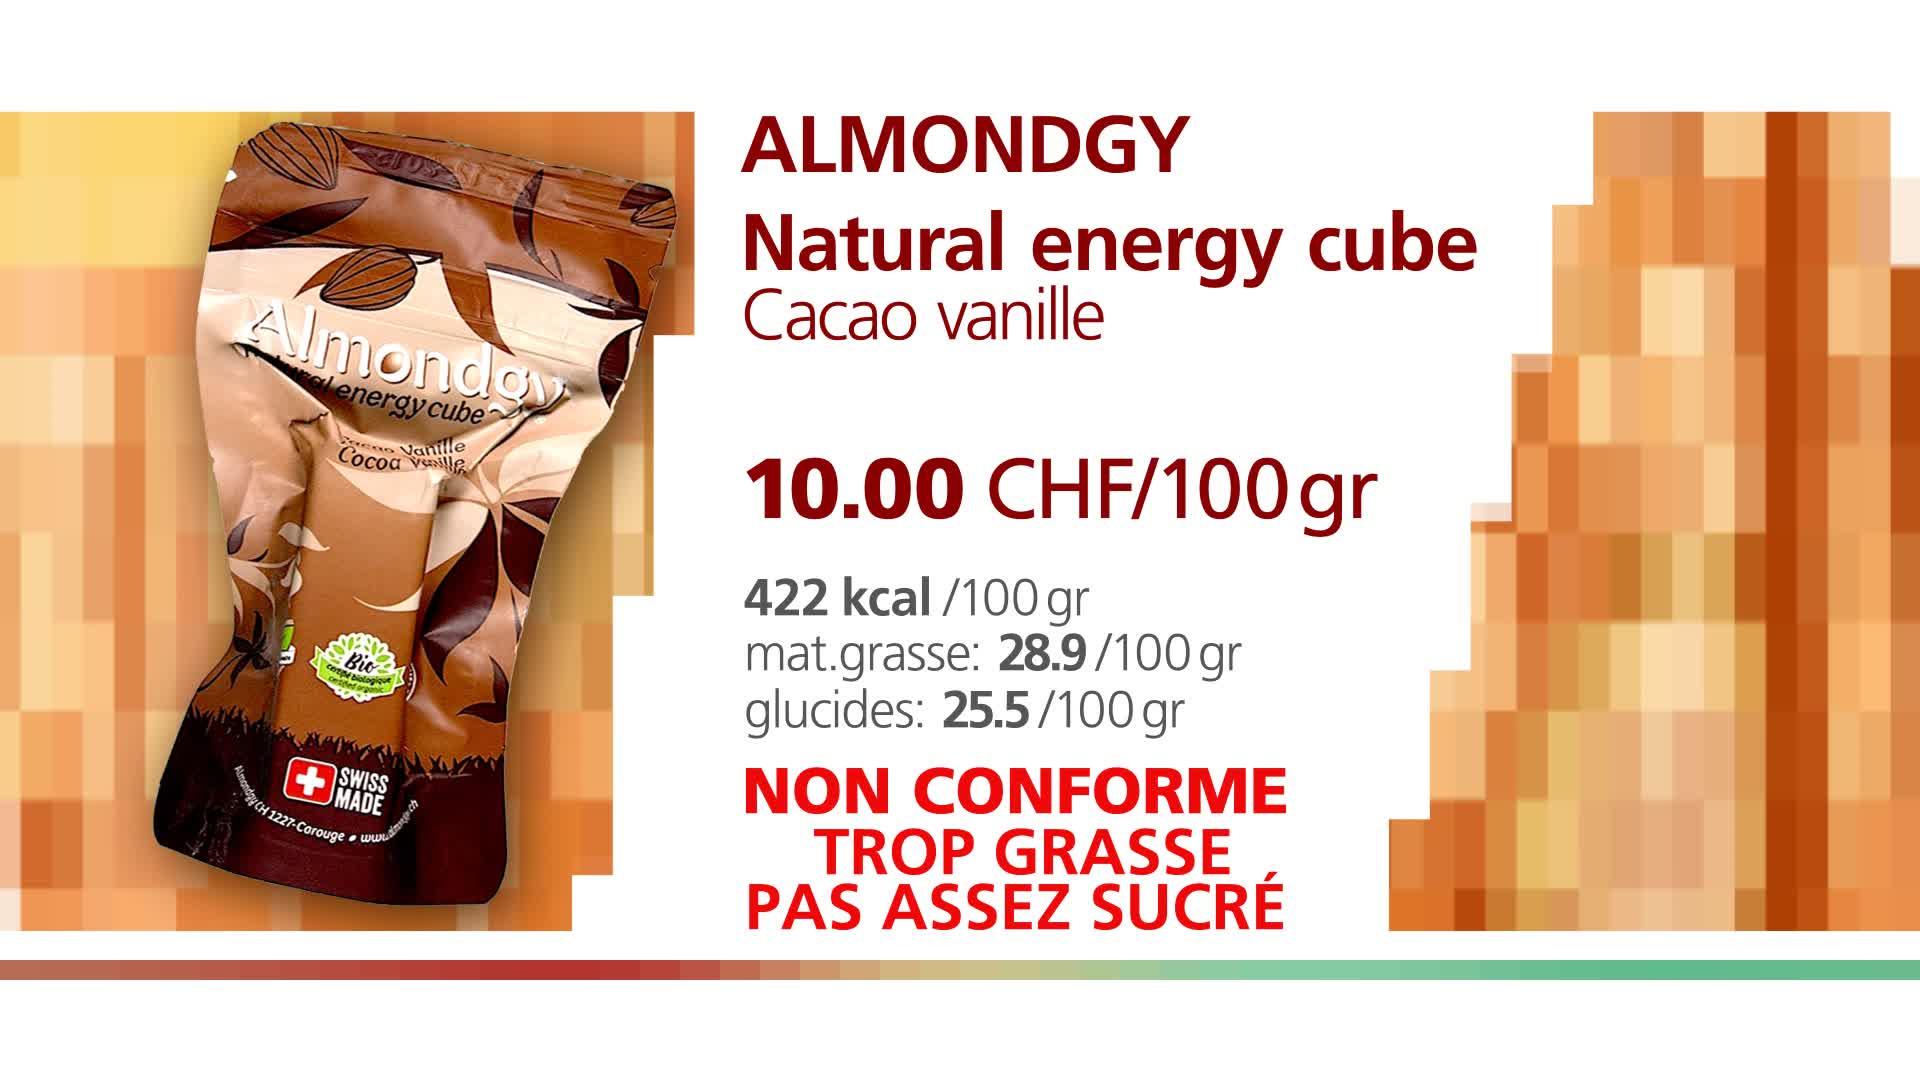 Almondgy natural energy cube.